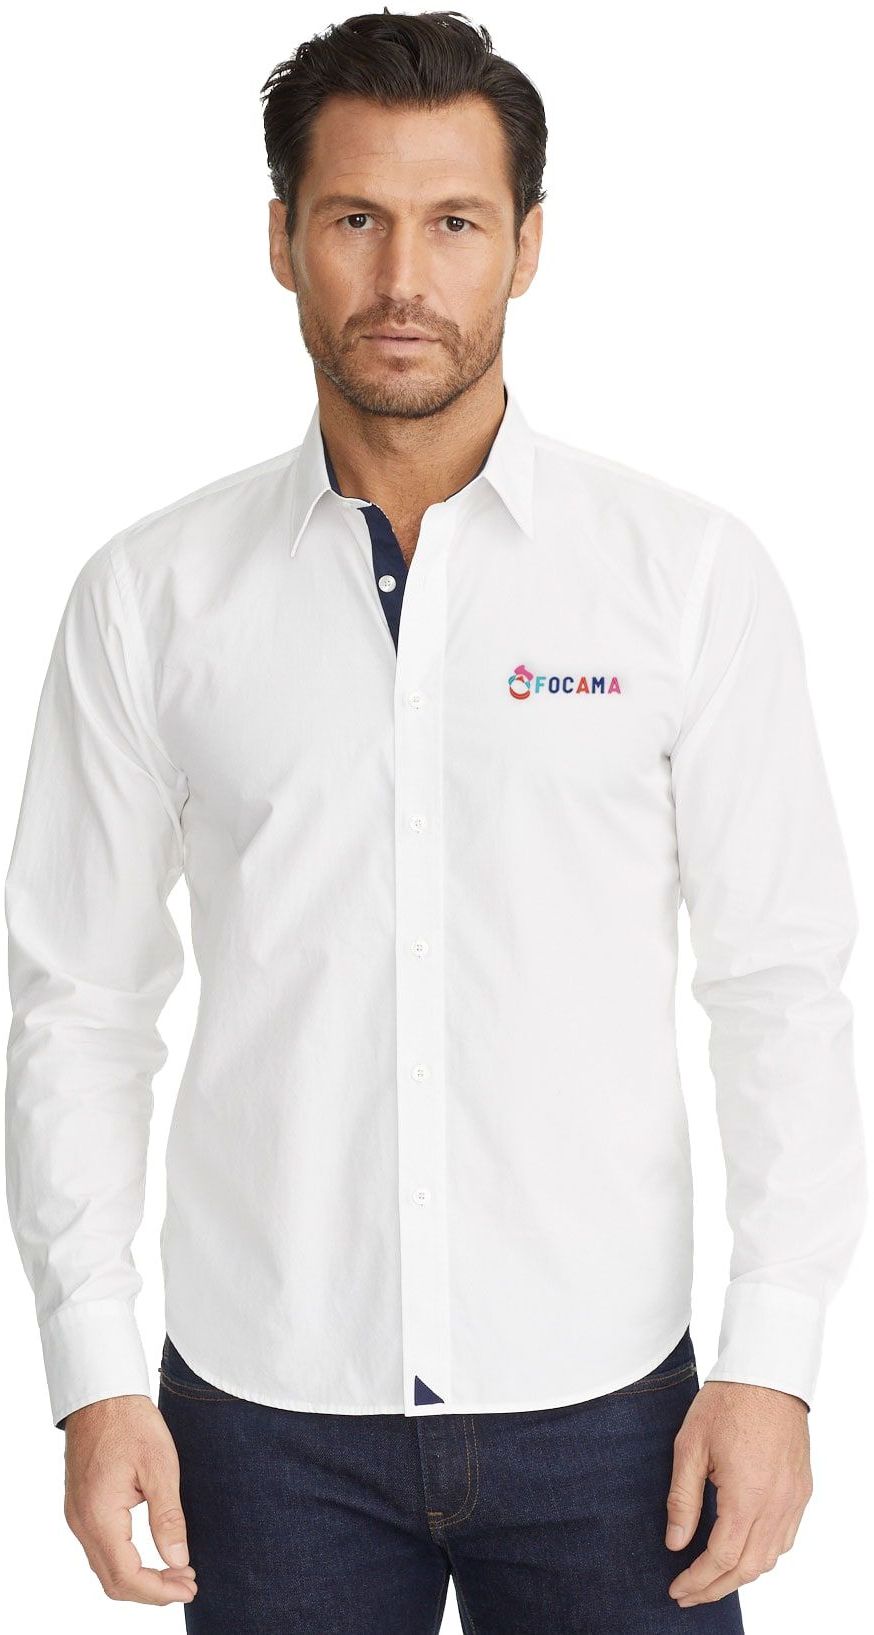 UNTUCKit Las Cases Classic Fit Multi-Color Contrast 100% Cotton Long Sleeve Men's Dress Shirt - Wrinkle Free